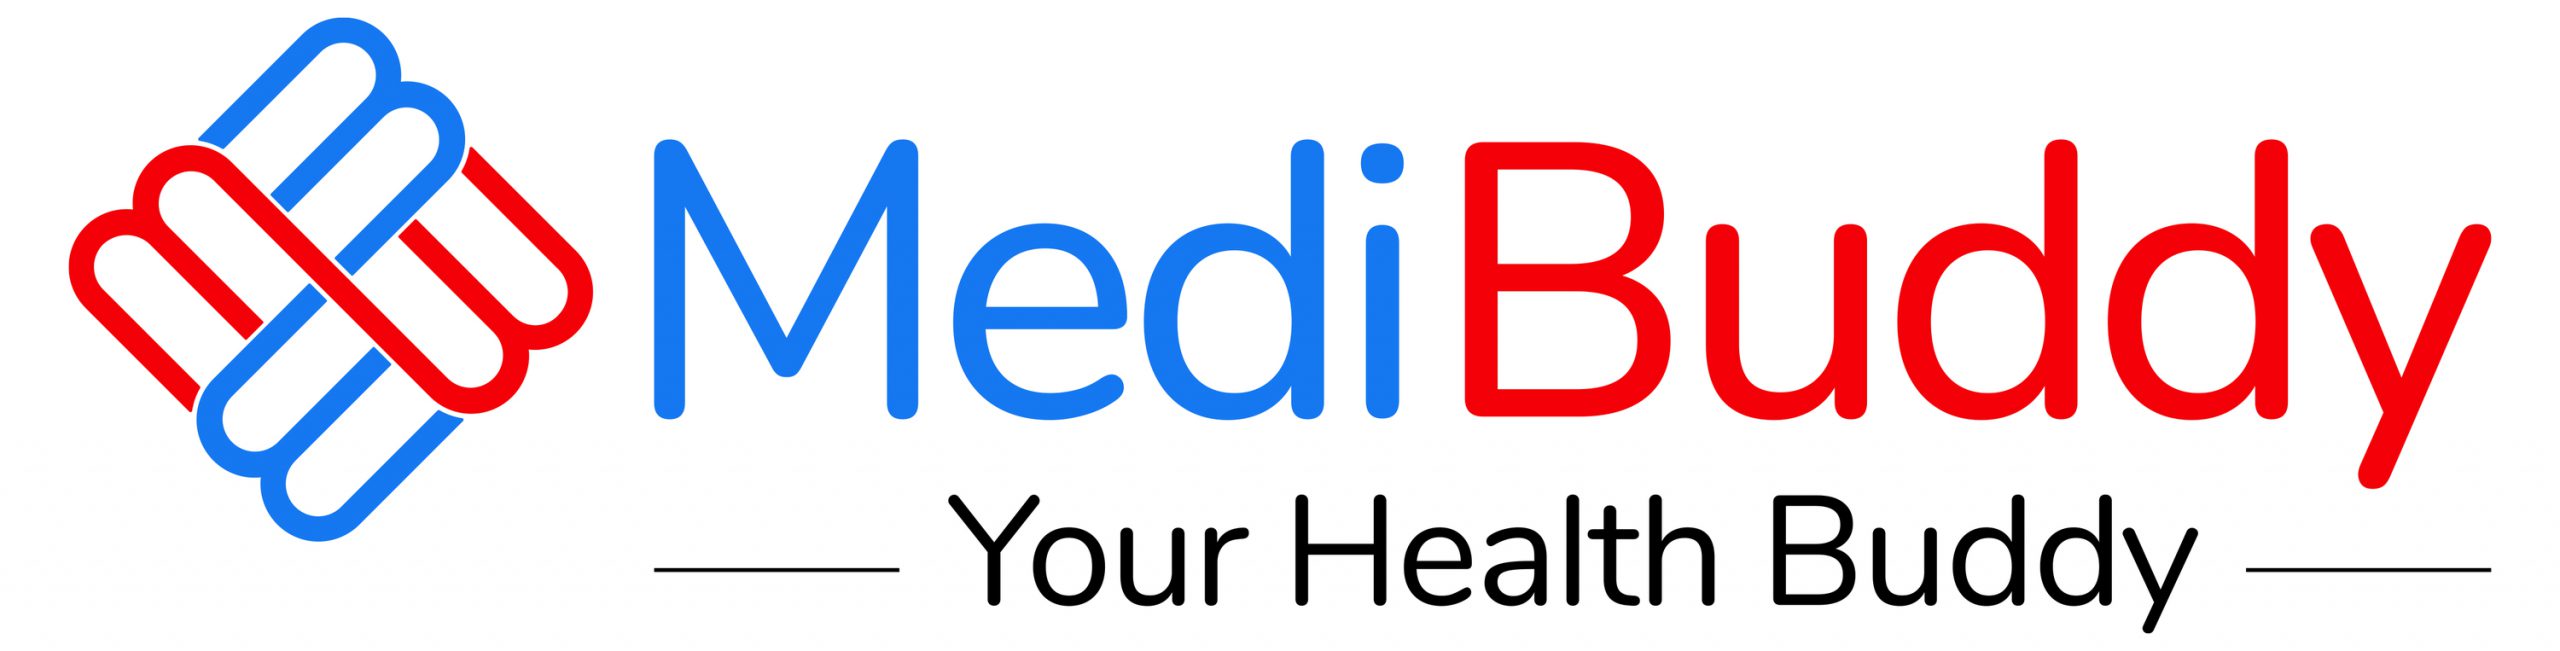 The indian digital healthcare platform “MEDIBUDDY” raises funds